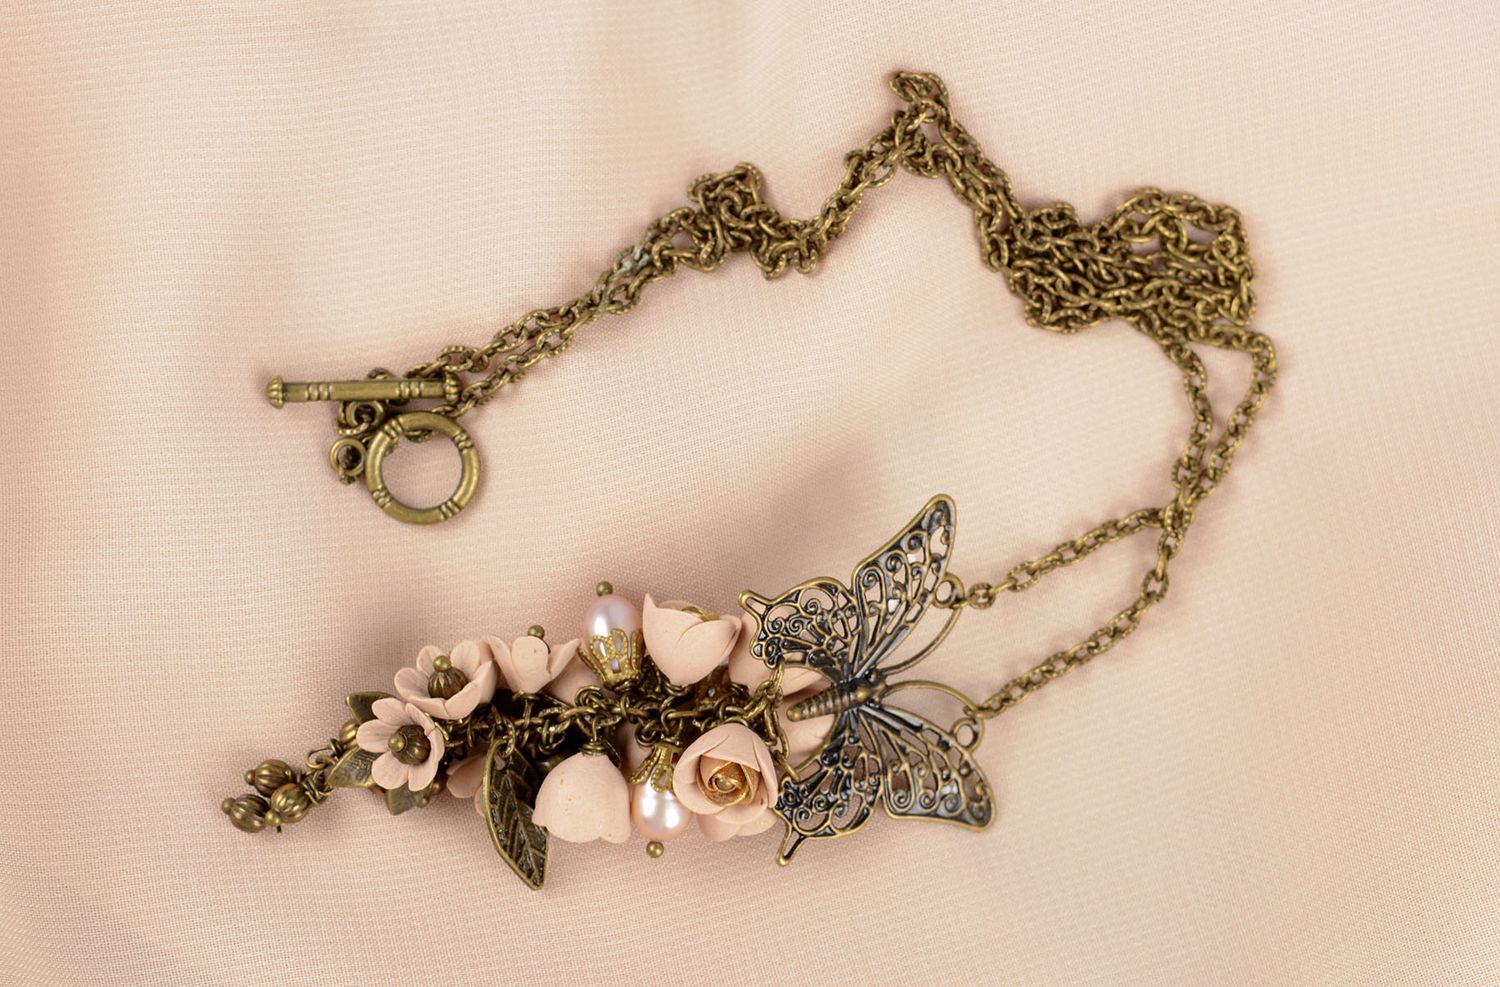 Handmade pendant unusual accessory gift idea clay pendant for women clay jewelry photo 1